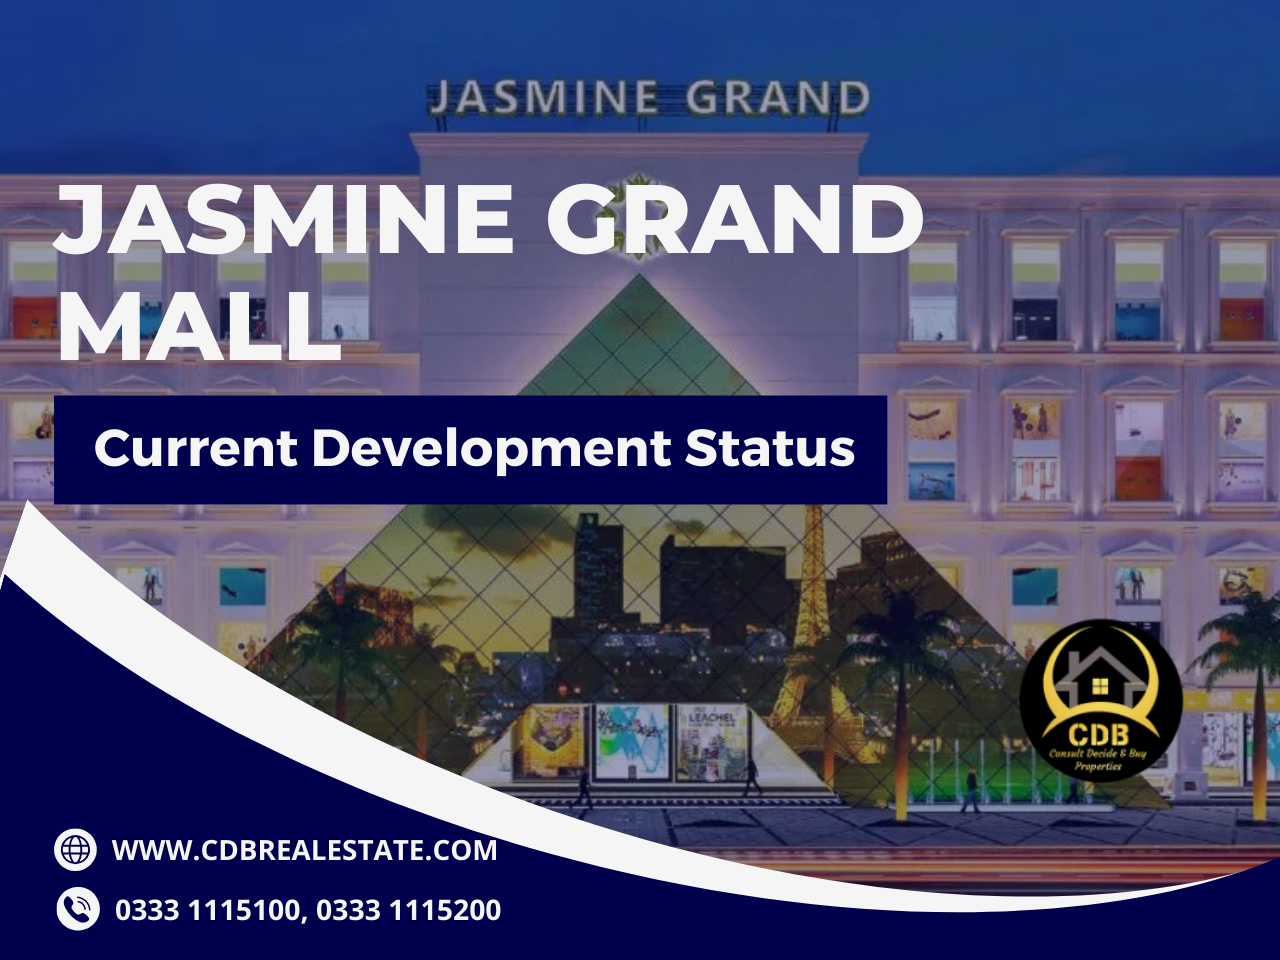 Jasmine Grand Mall: Current Development Status